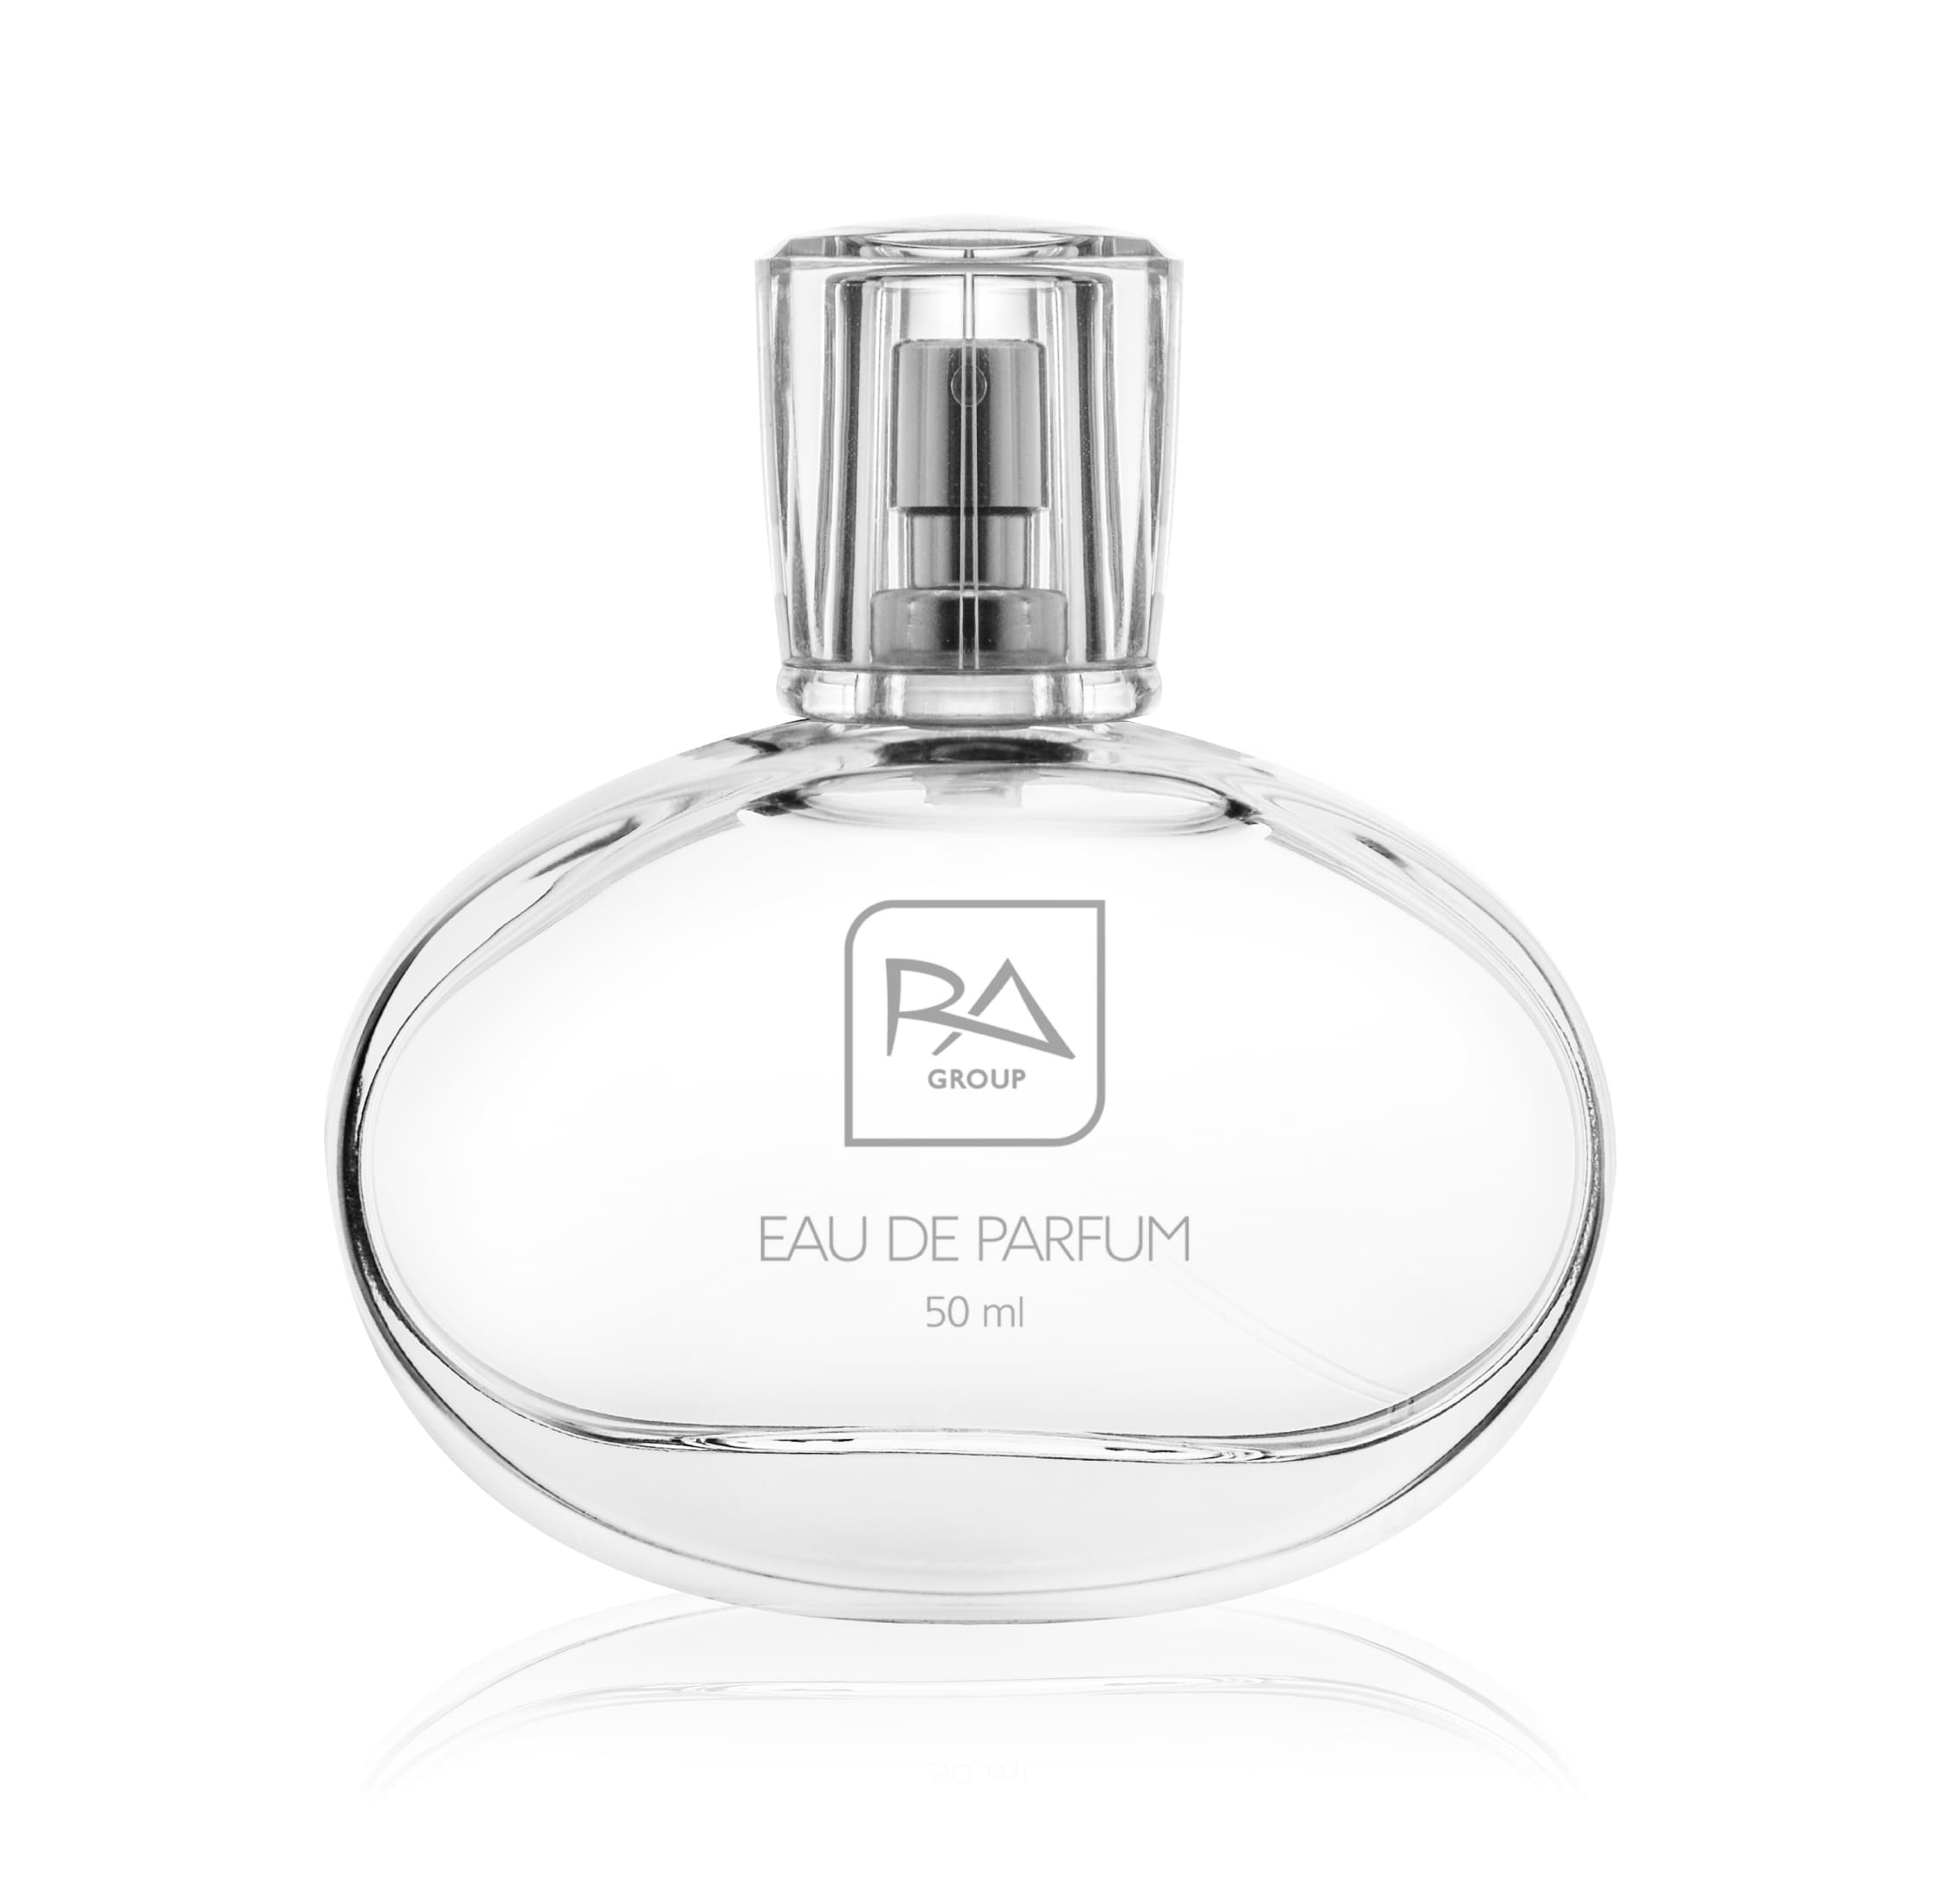 Eau de parfum RA34